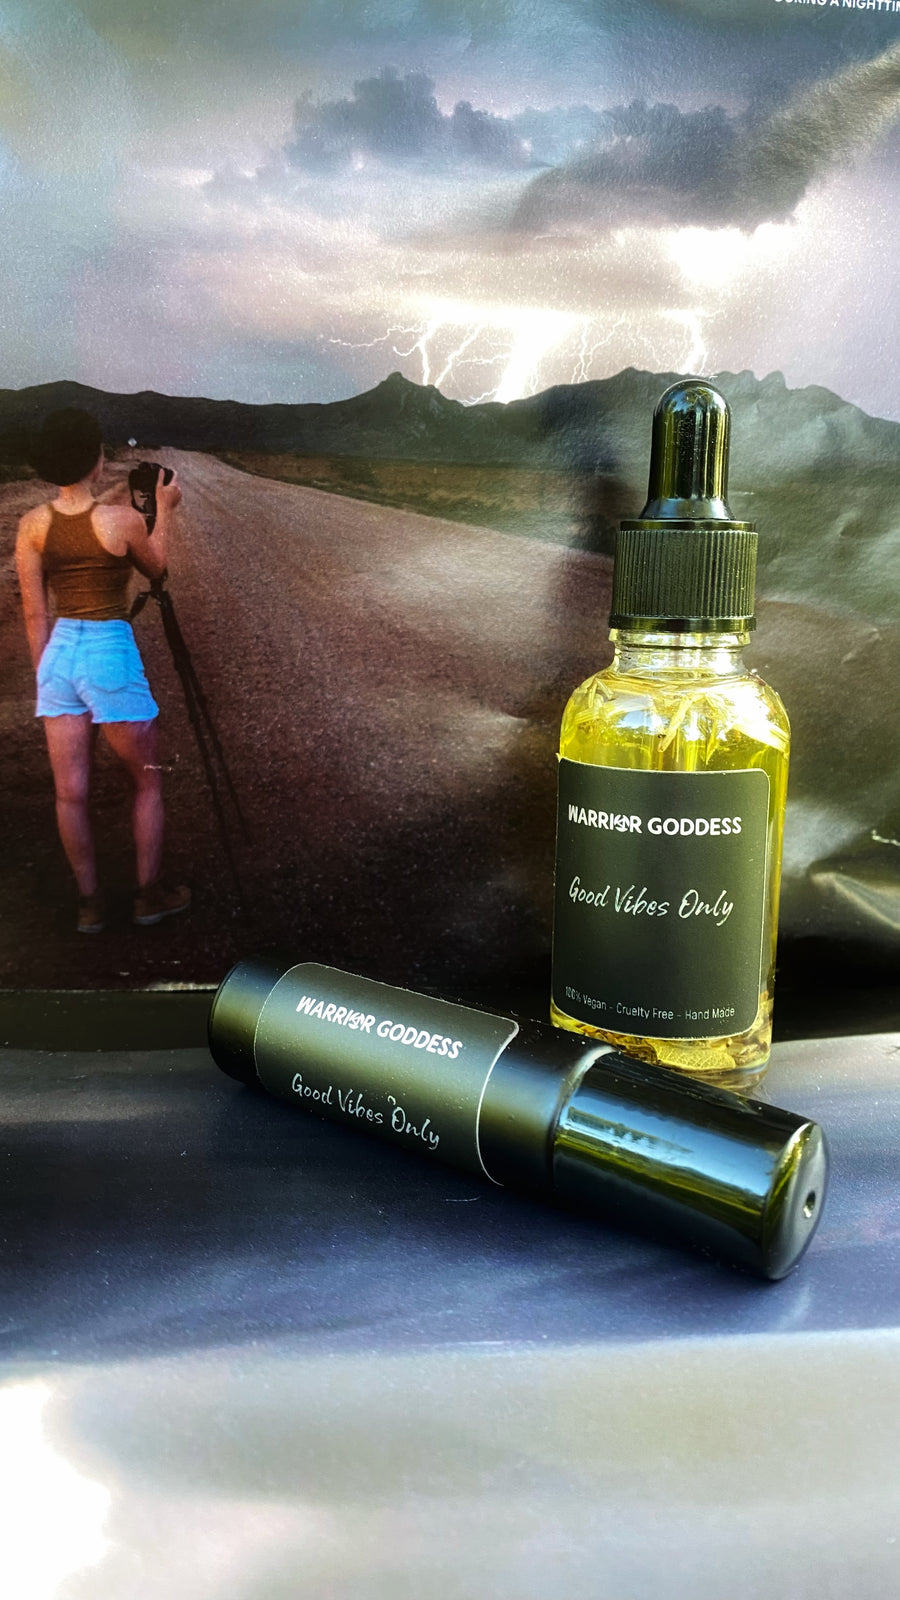 Moringa Scented Essential Oil Blend - Good Vibes Only - Warrior Goddess